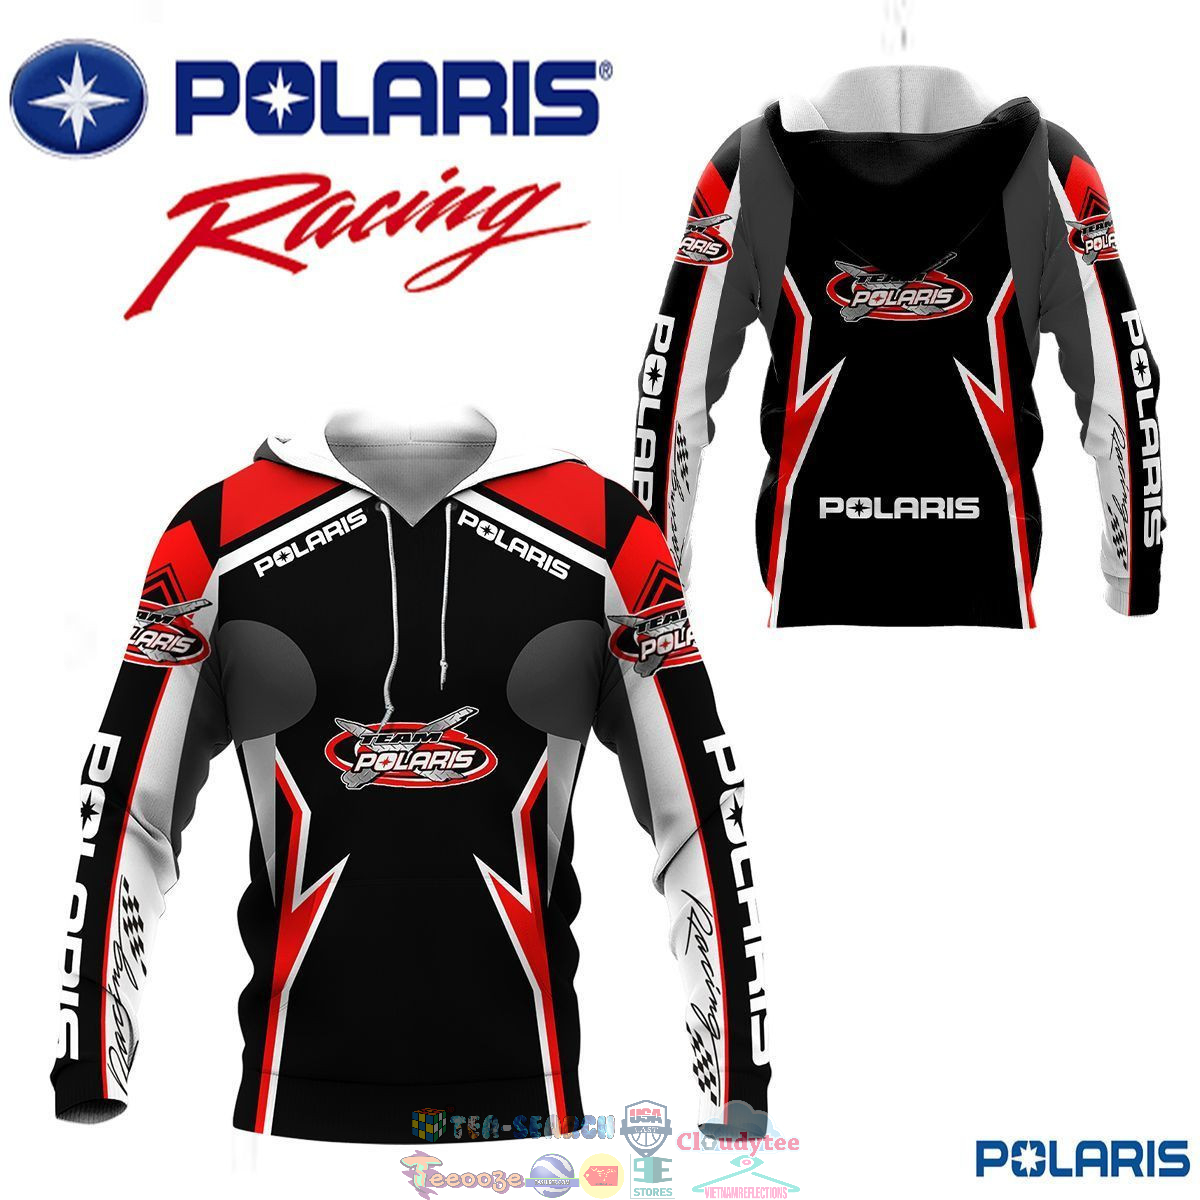 Polaris Racing Team ver 7 3D hoodie and t-shirt – Saleoff